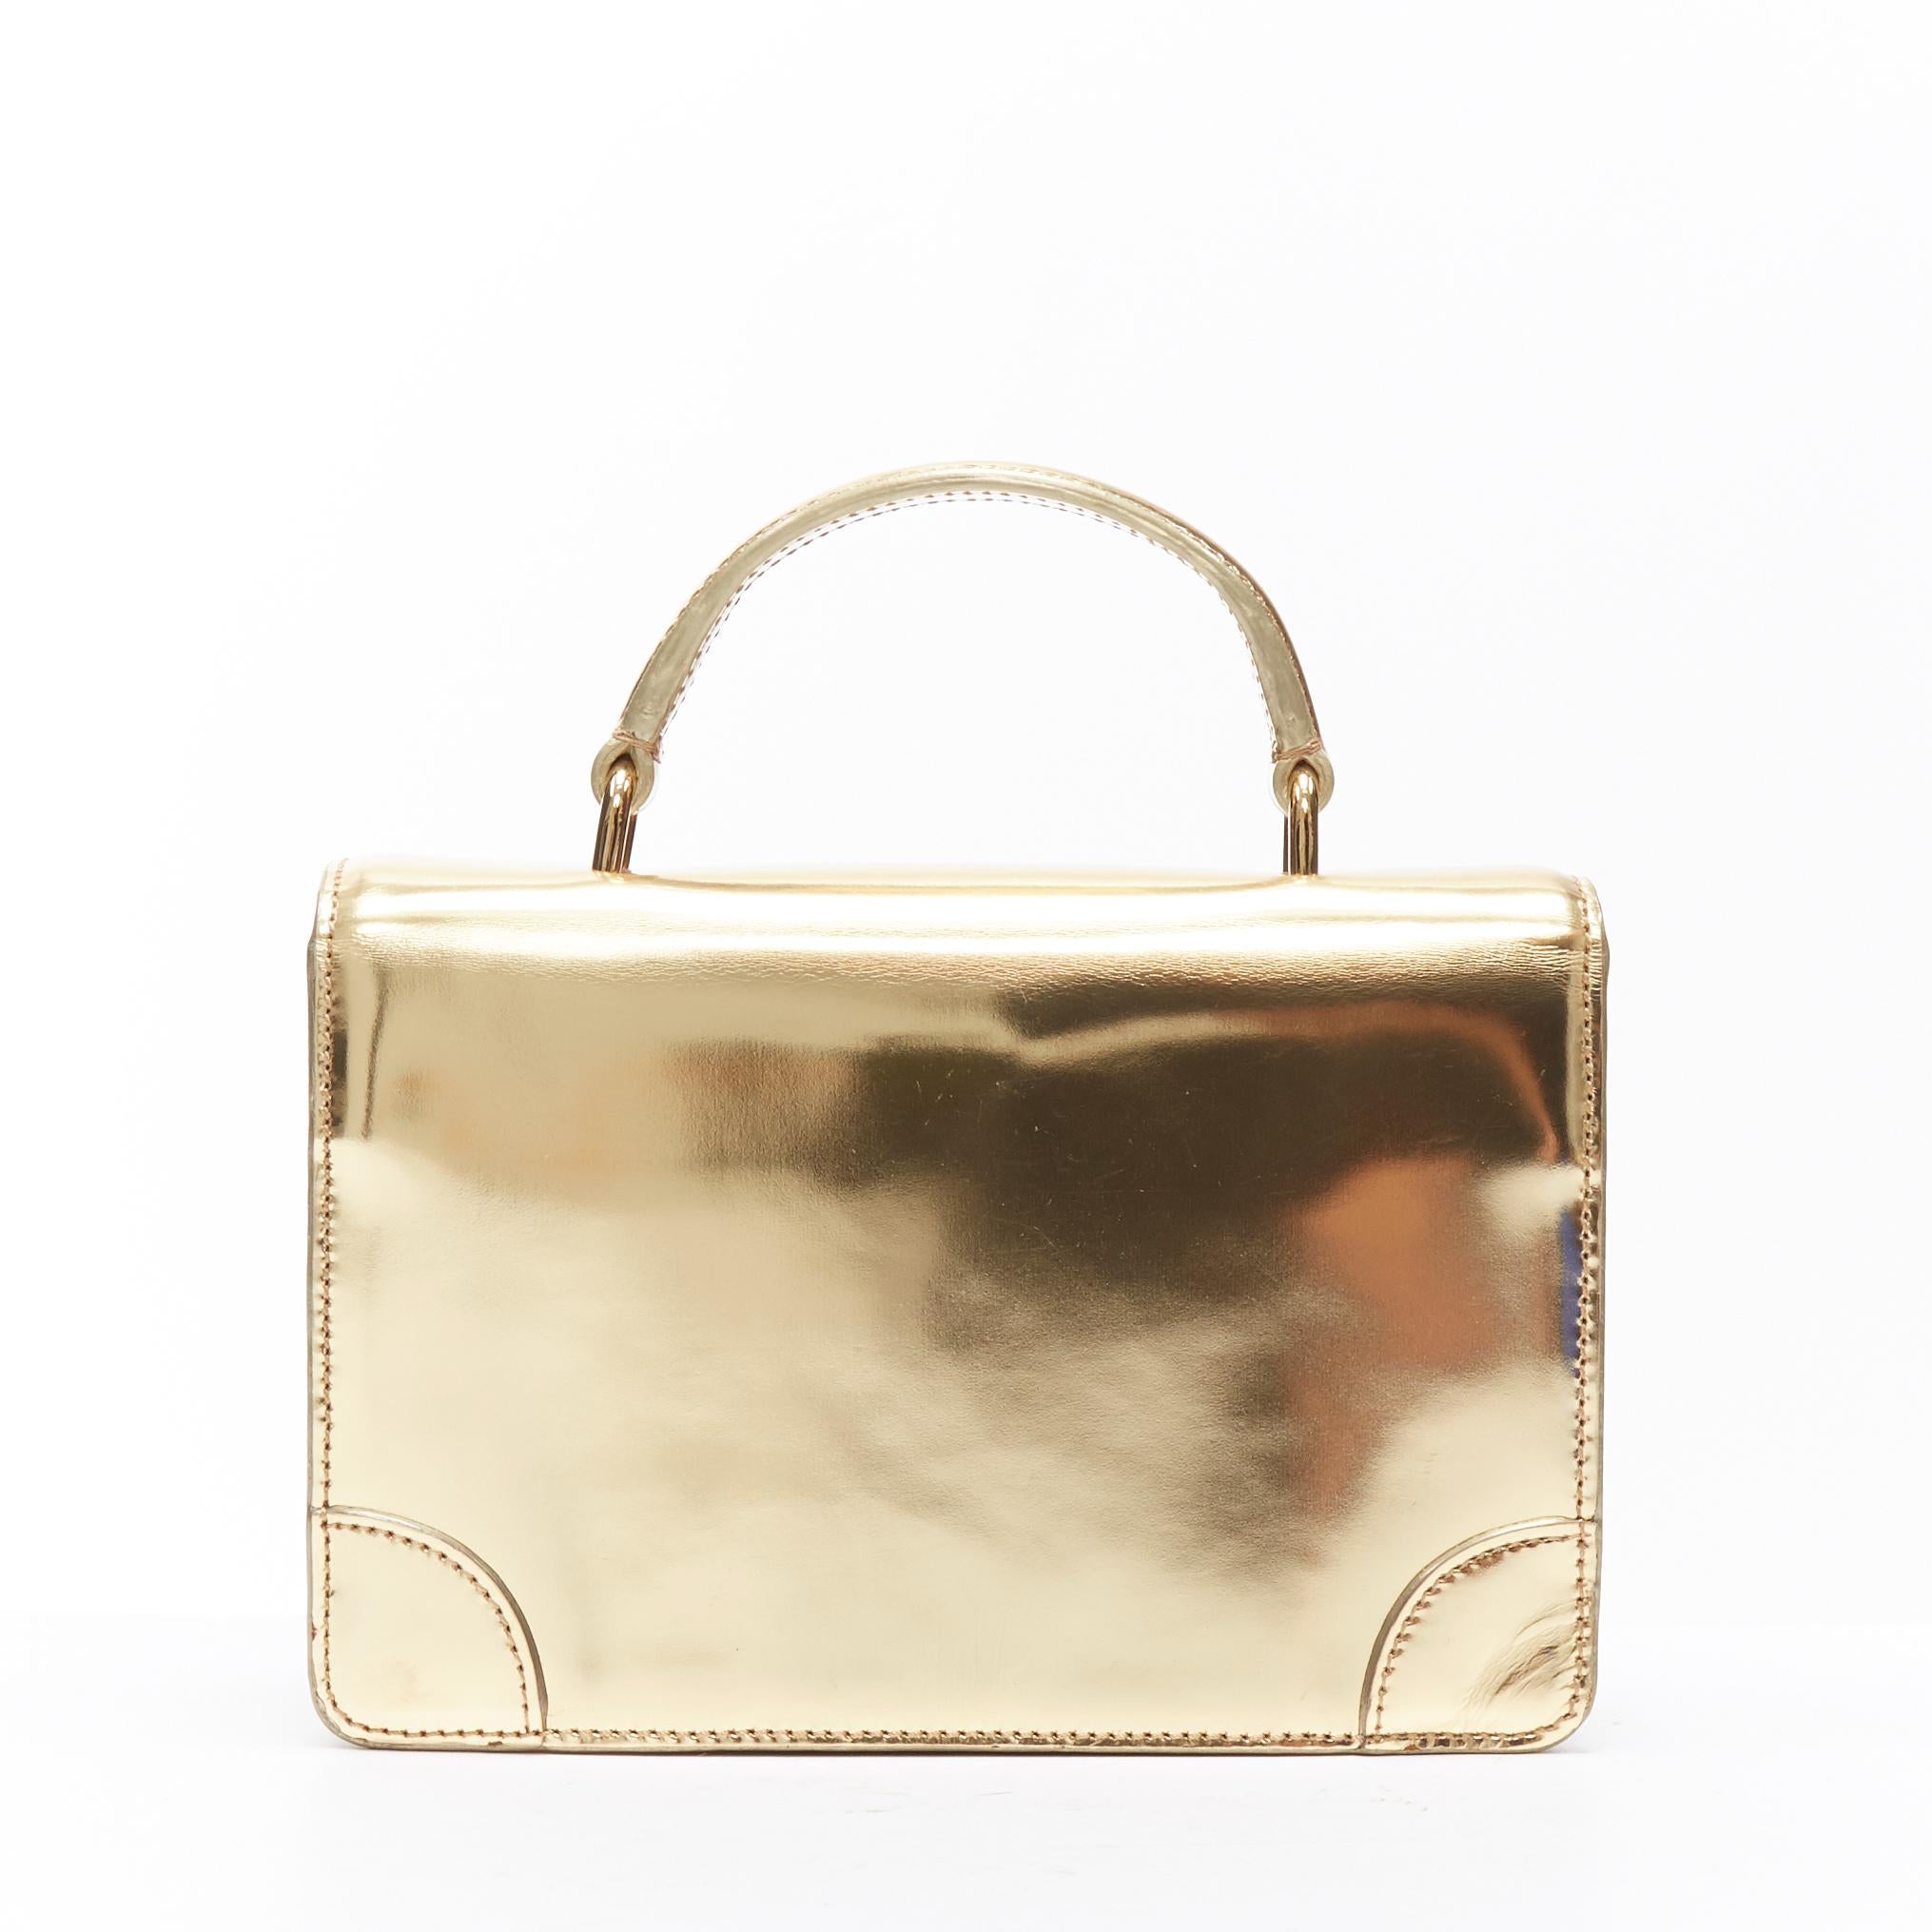 Women's RALPH LAUREN Ricky mirrored gold lock flap leather crossbody small satchel bag